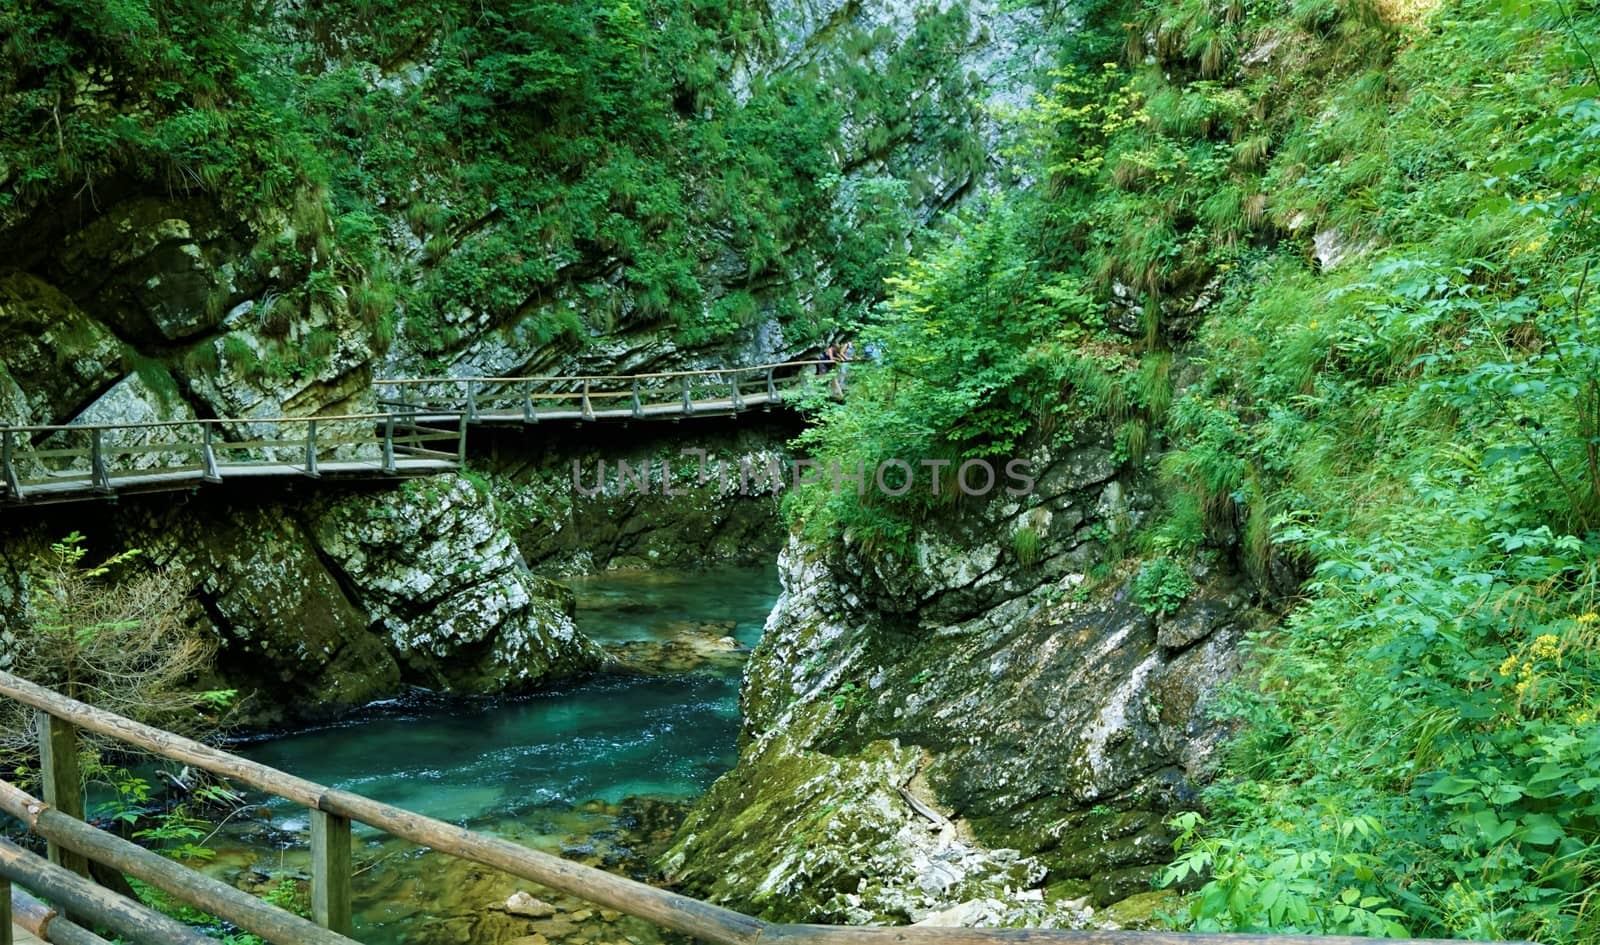 Vintgar Gorge hiking trail near Bled by pisces2386